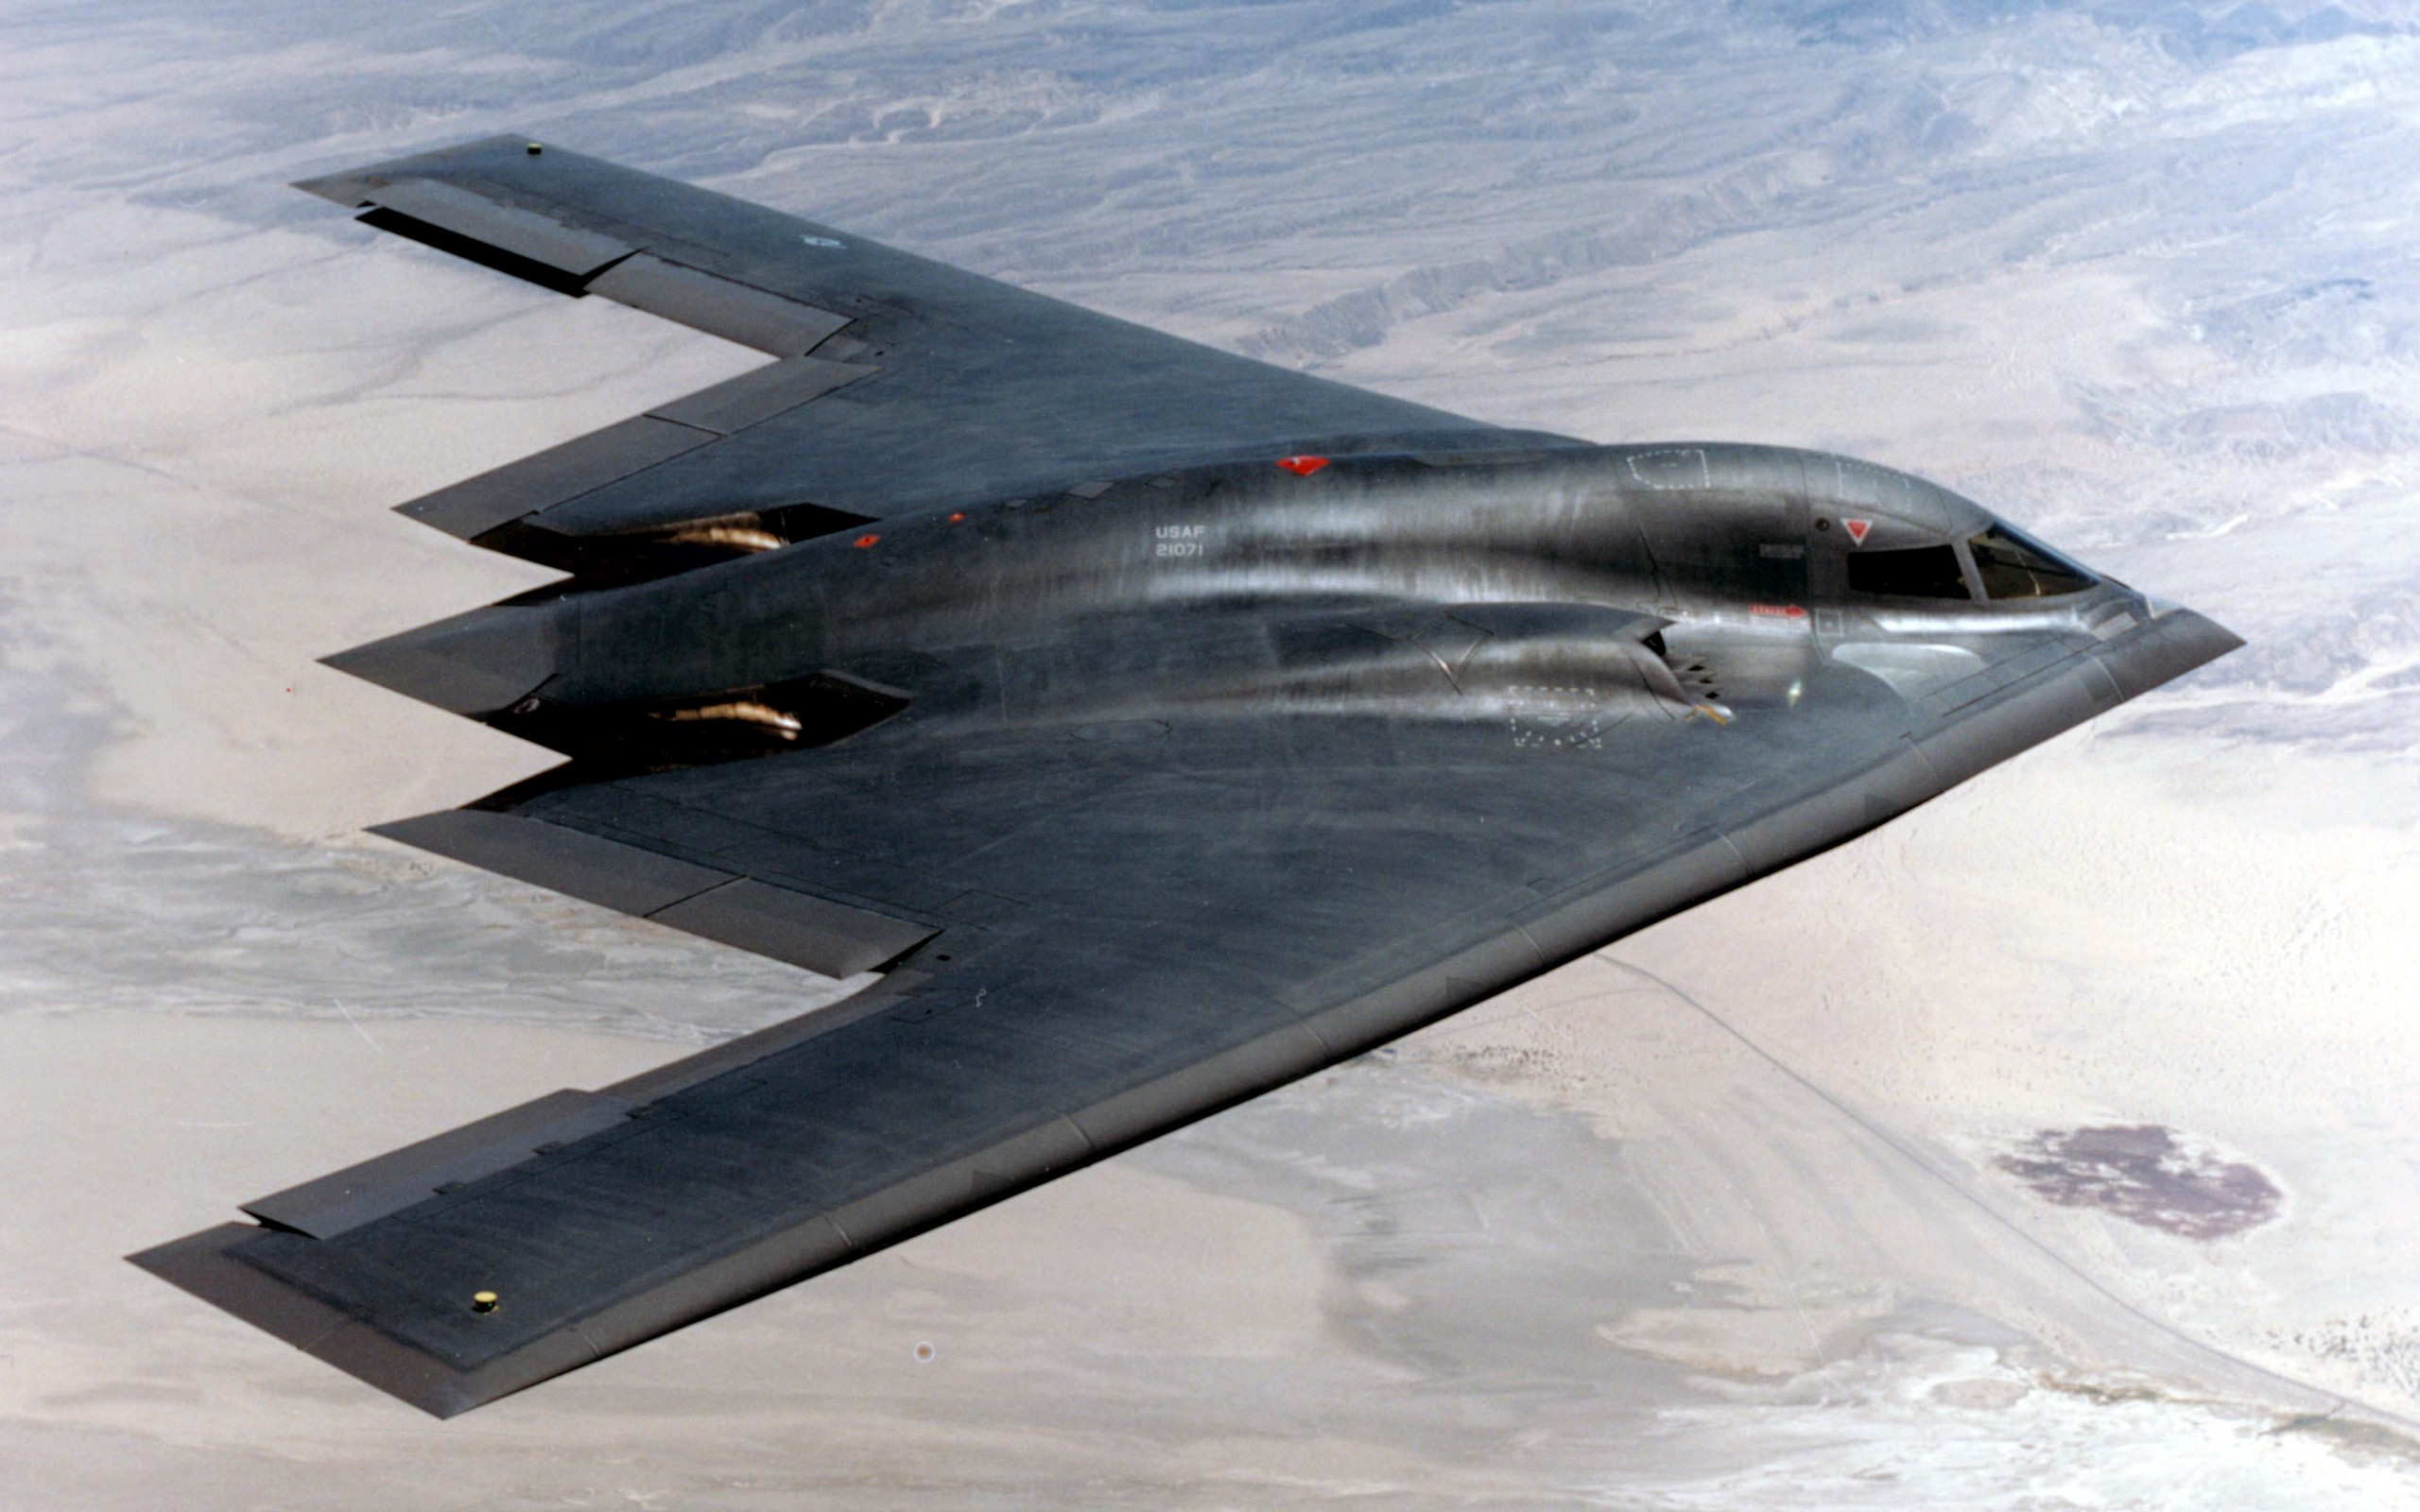 General 2560x1600 aircraft military airplane Northrop Grumman B-2 Spirit strategic bomber military aircraft American aircraft propaganda